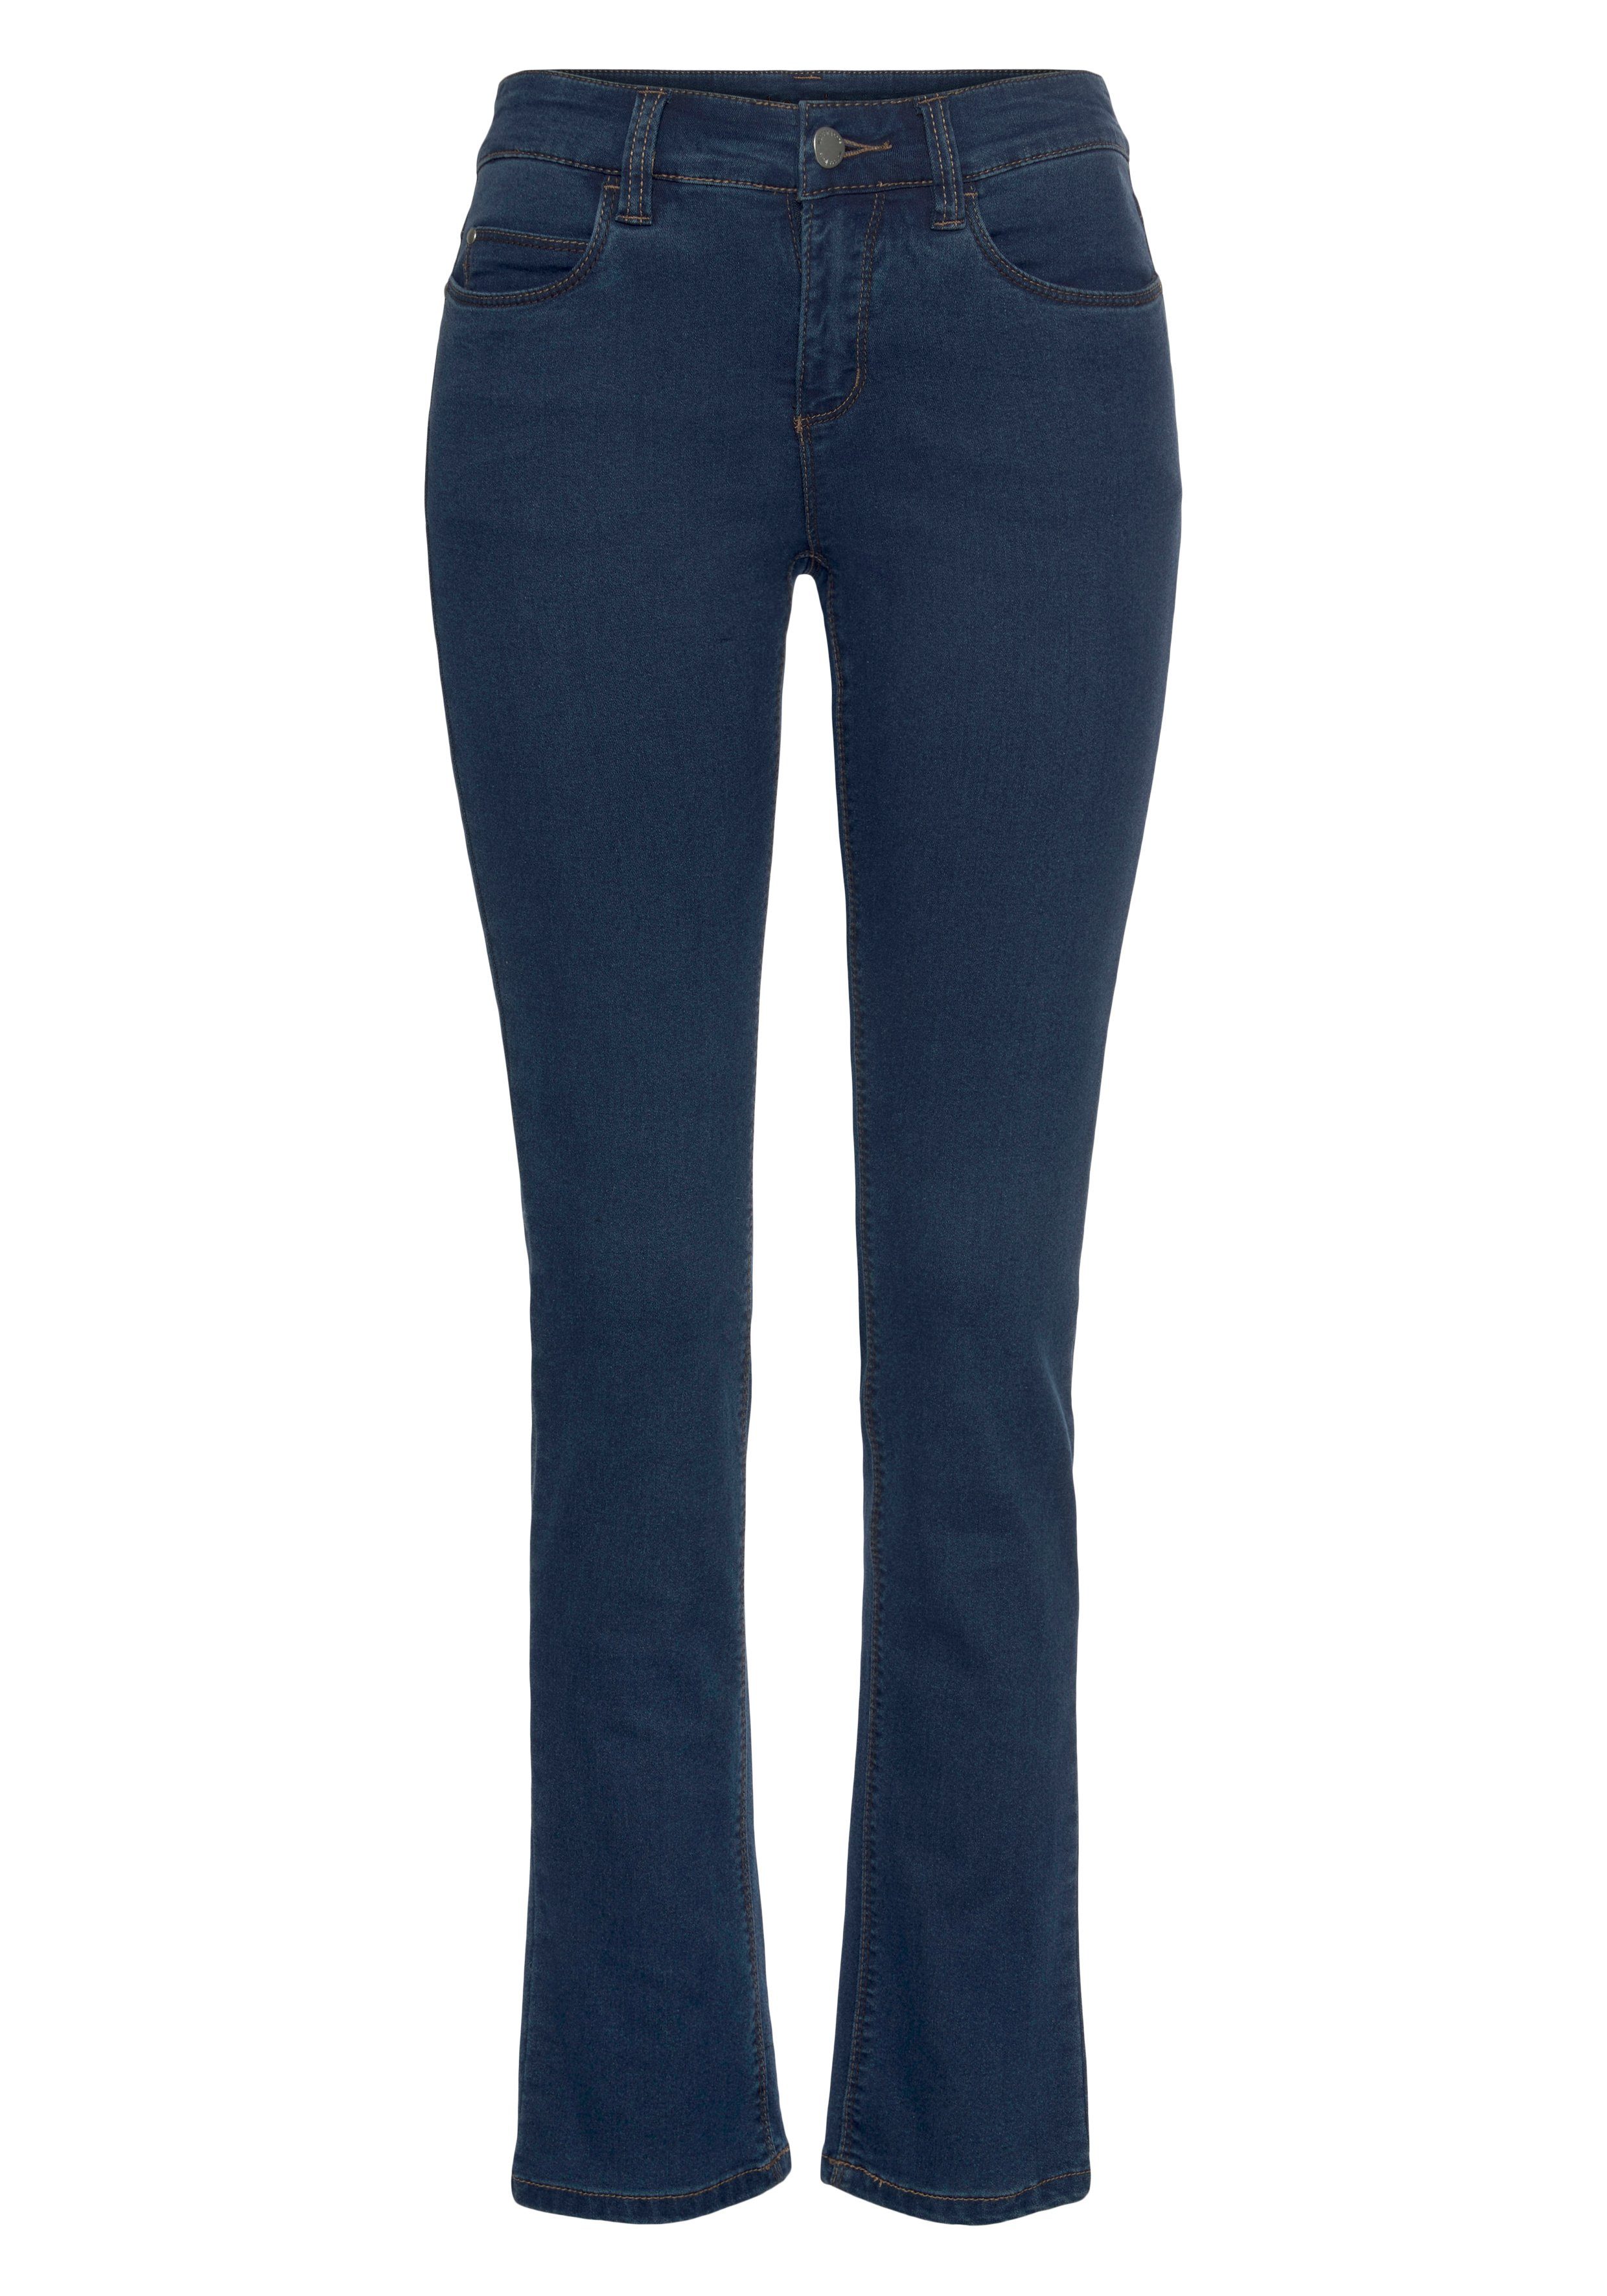 gerader wonderjeans stone Klassischer Slim-fit-Jeans Classic-Slim Schnitt washed blue